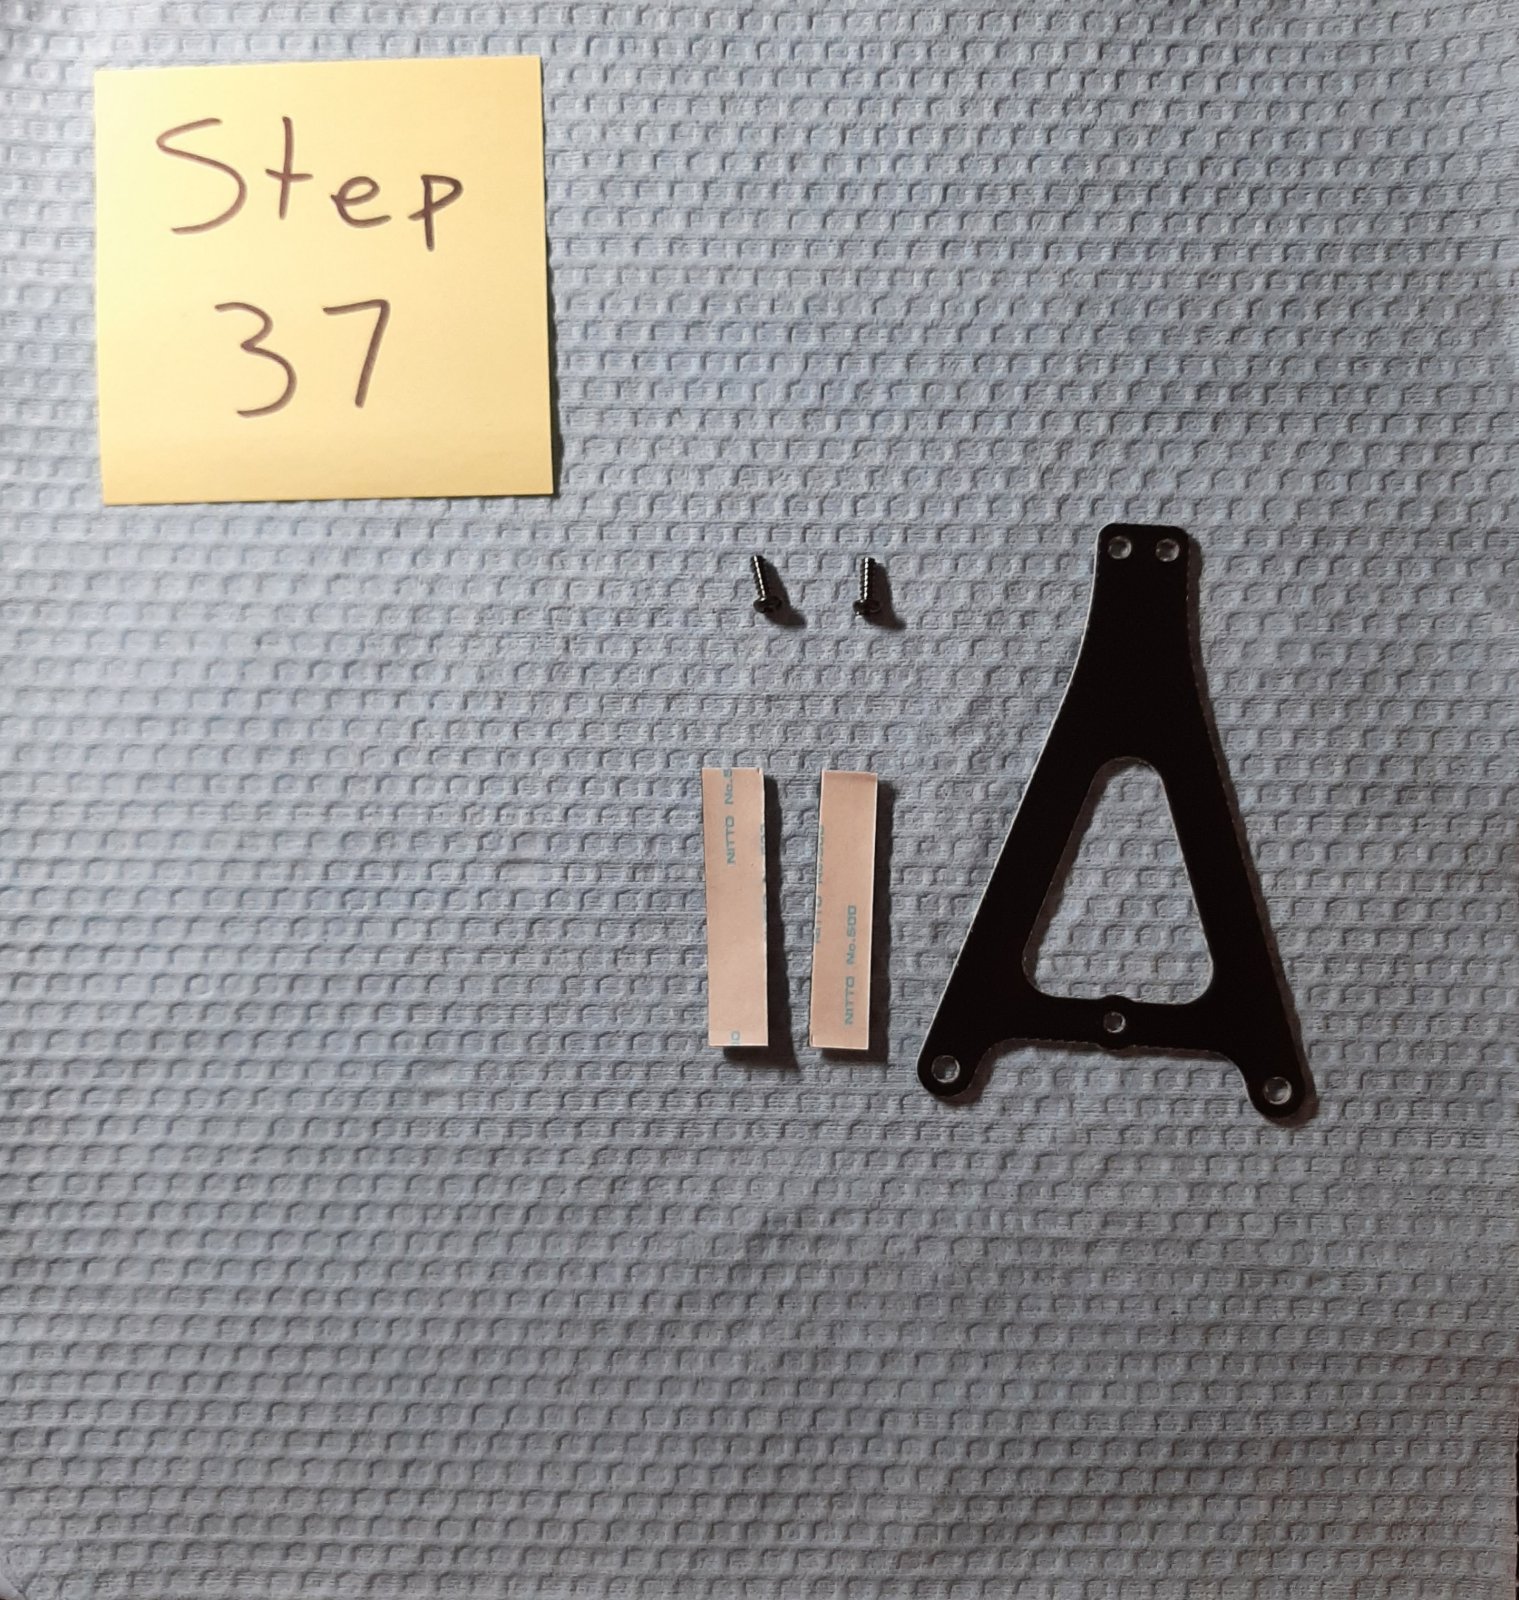 Step 37 Parts.jpg